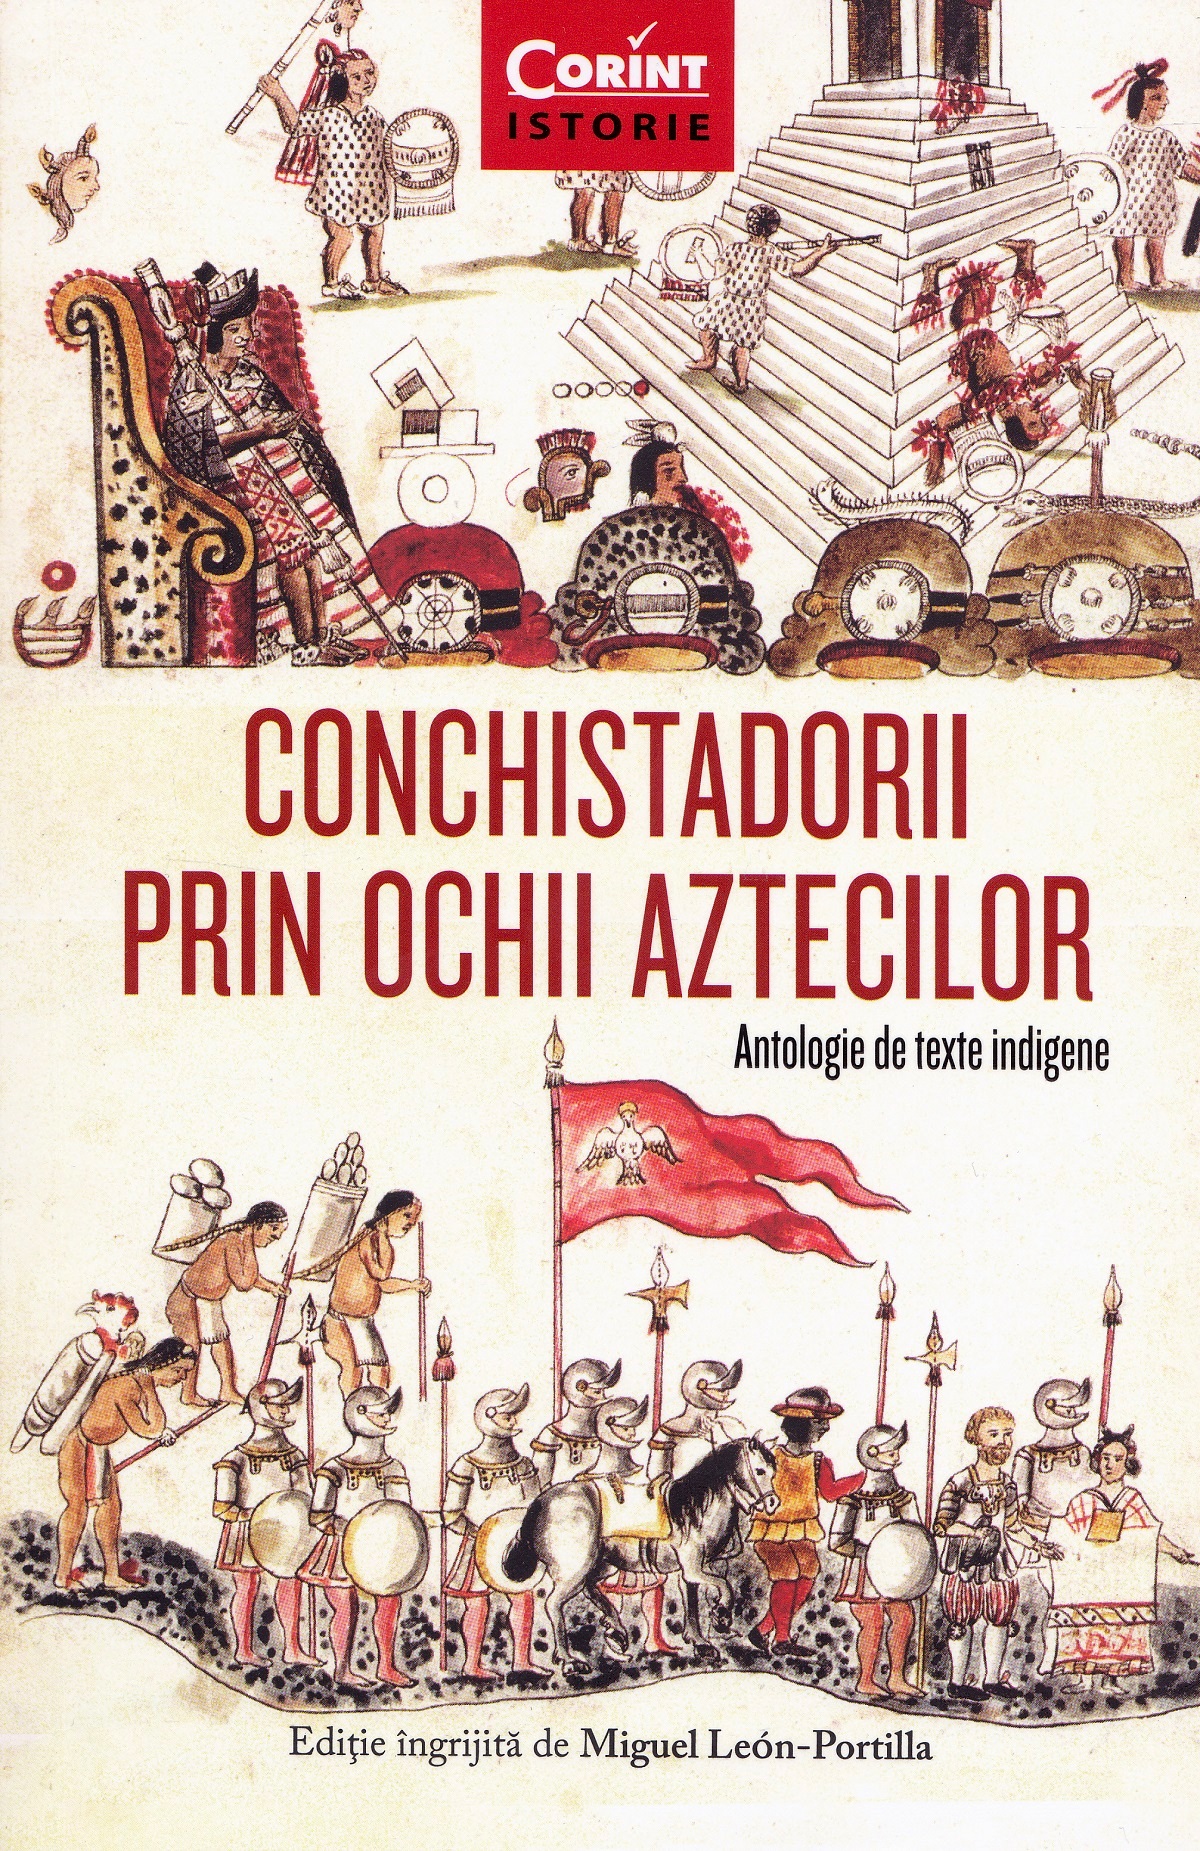 Conchistadorii prin ochii aztecilor - Miguel Leon-Portilla